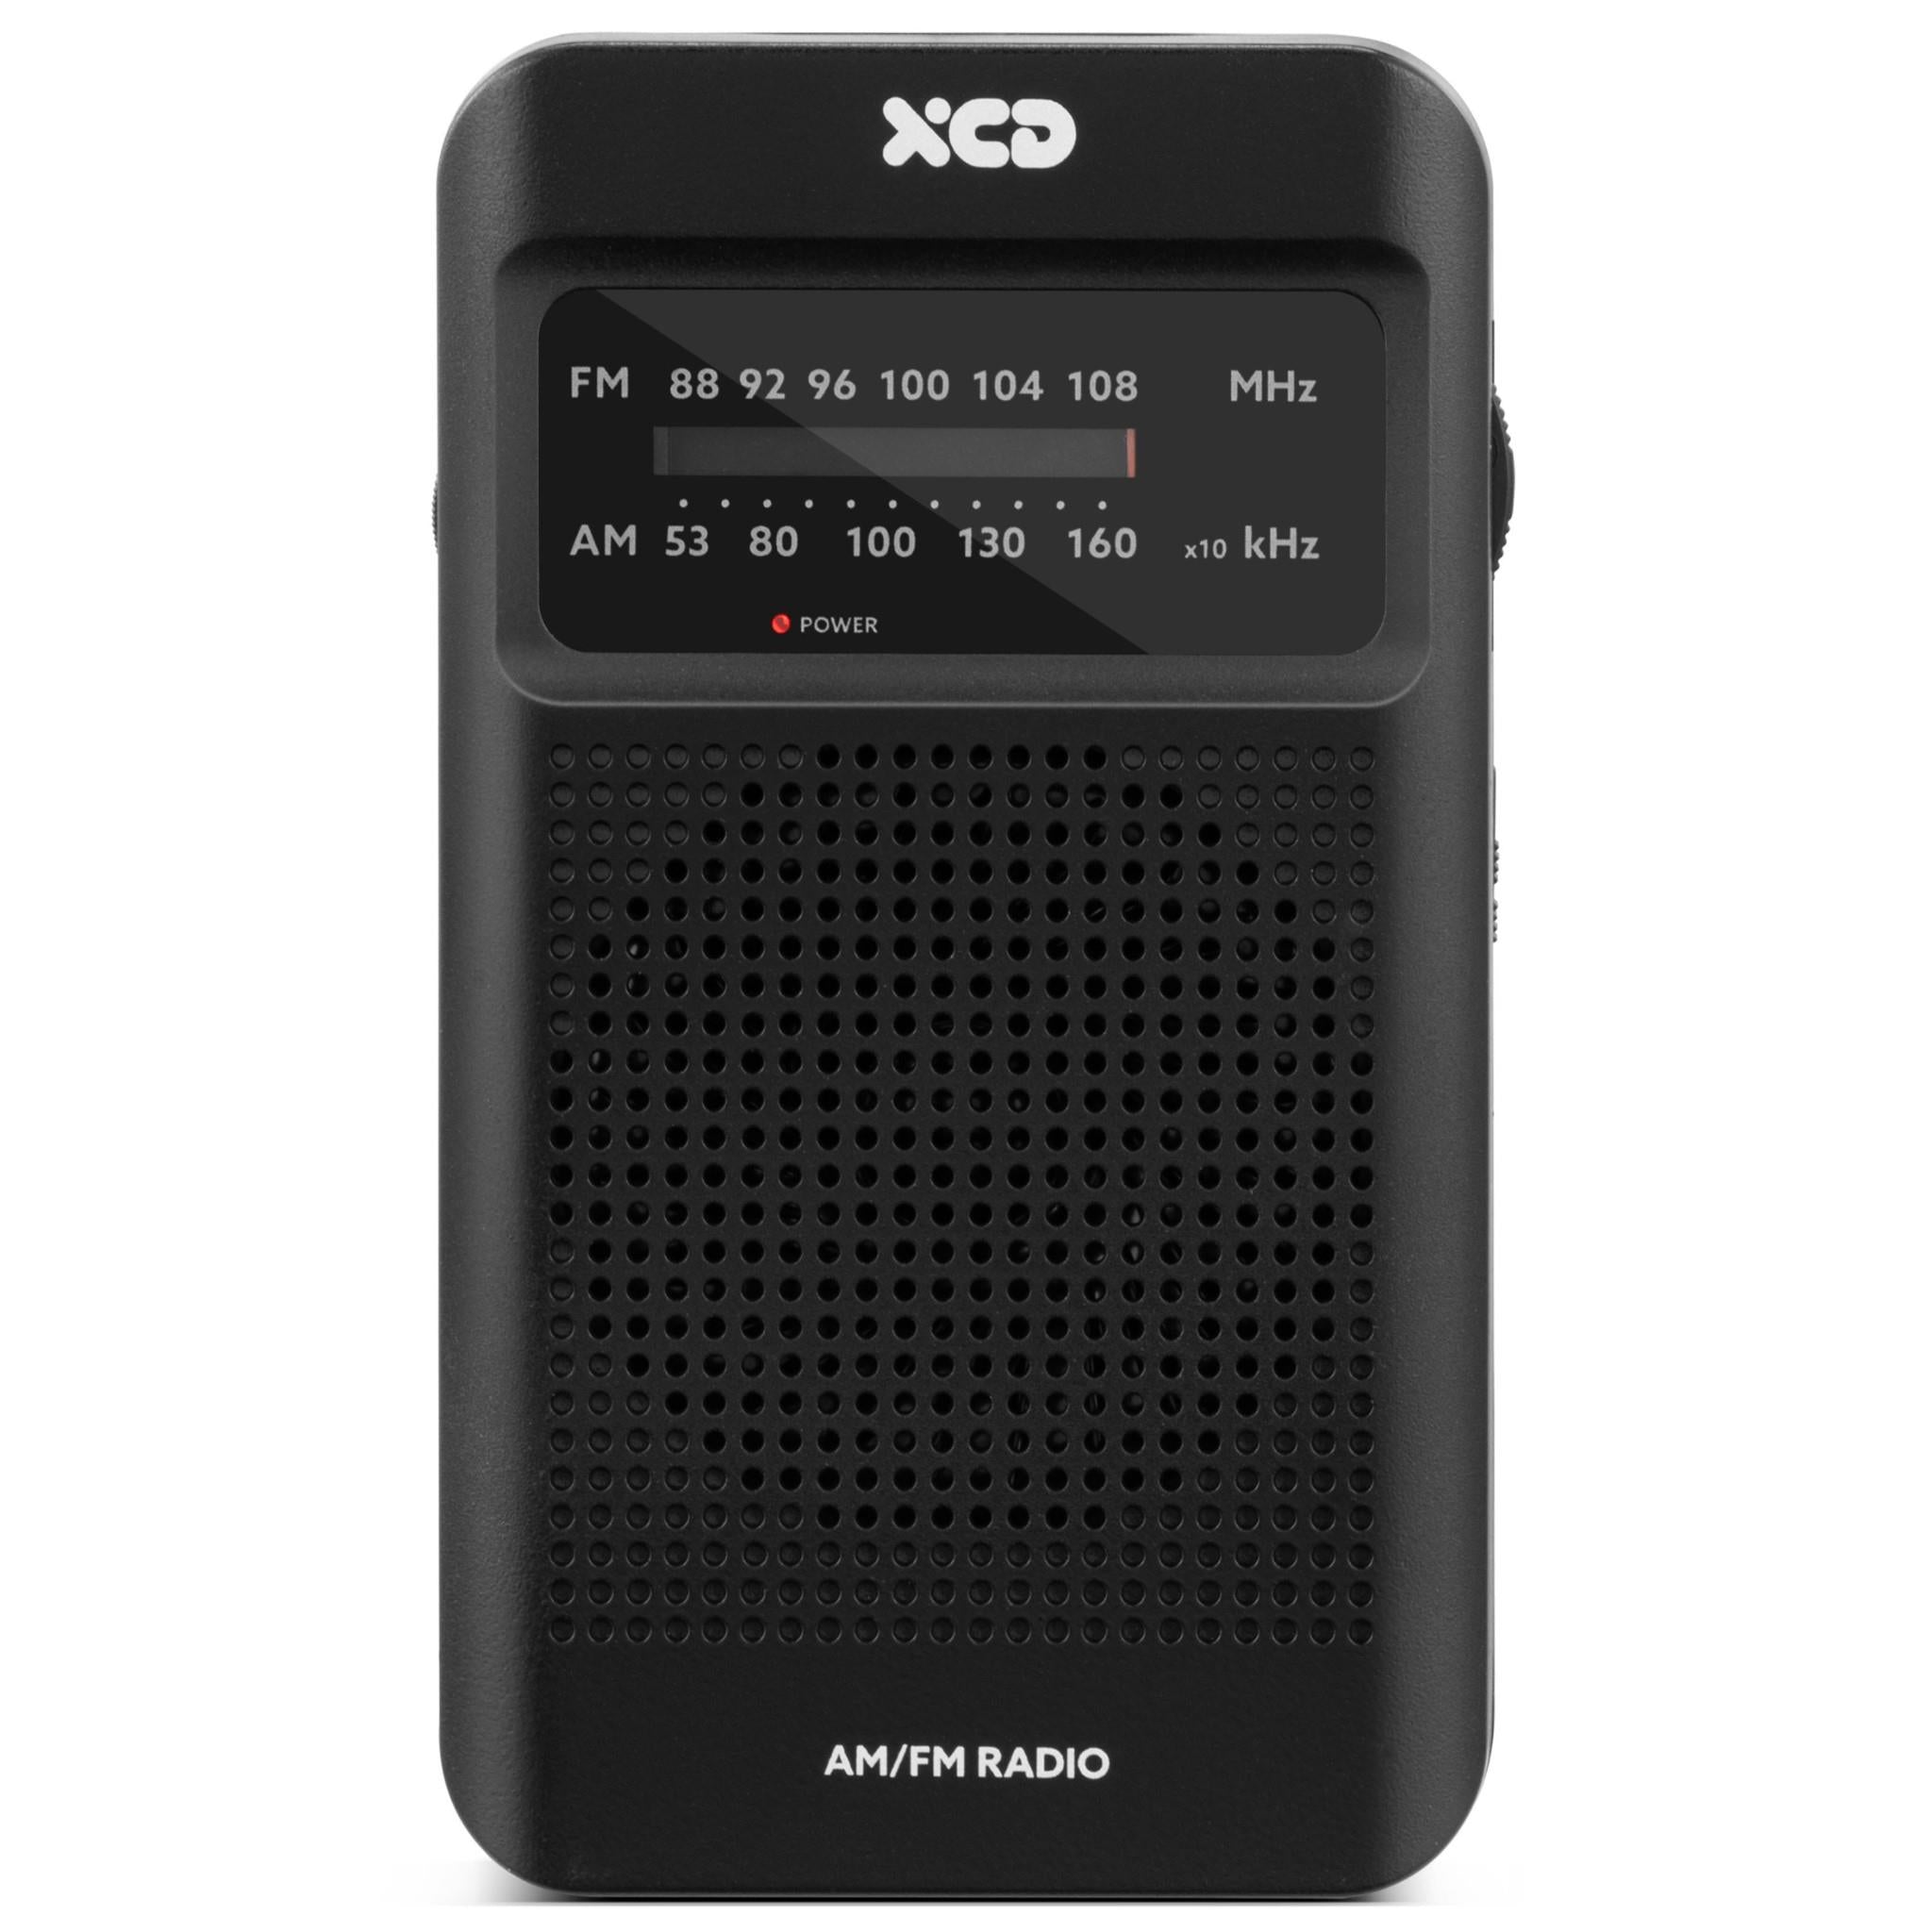 xcd portable am/fm radio